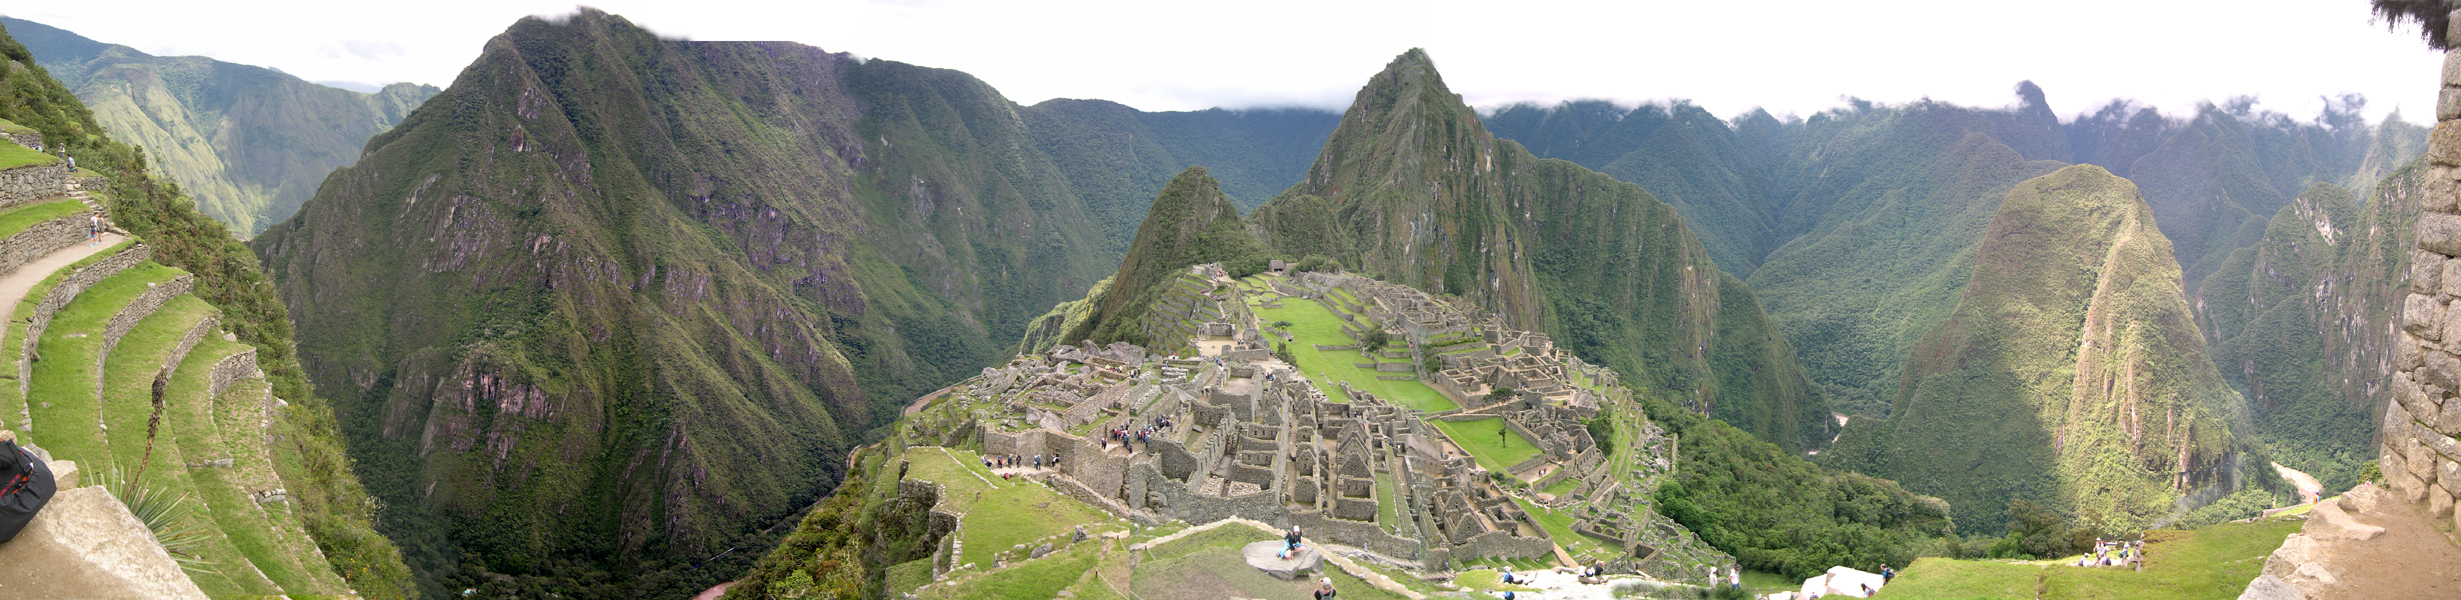 Machu Picchu - Panorama